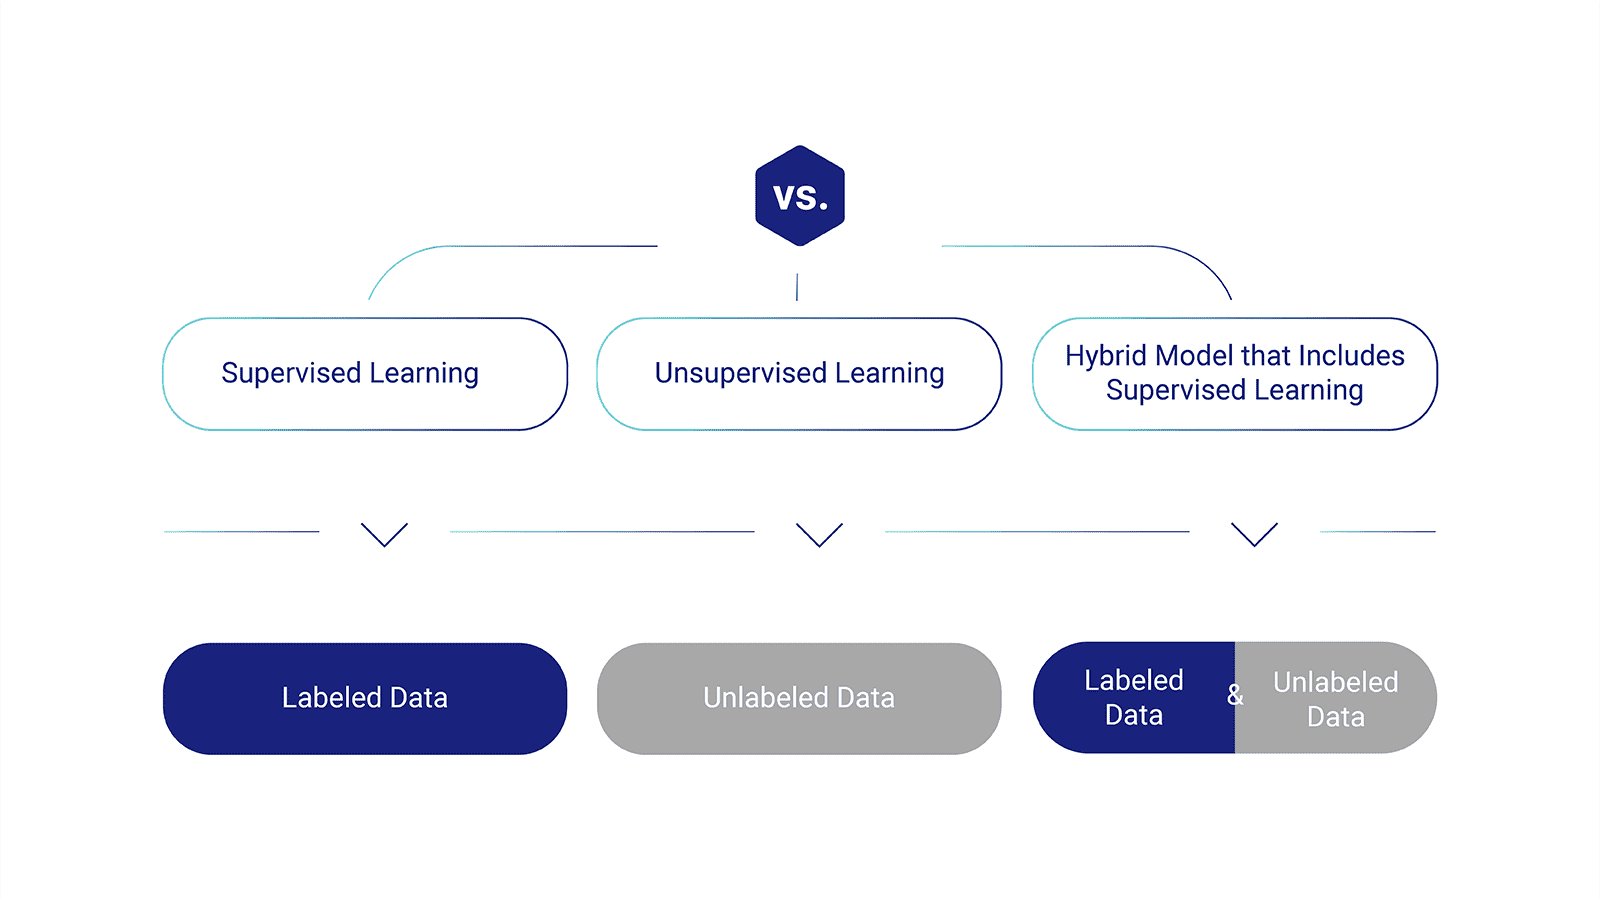 Hybrid machine learning models